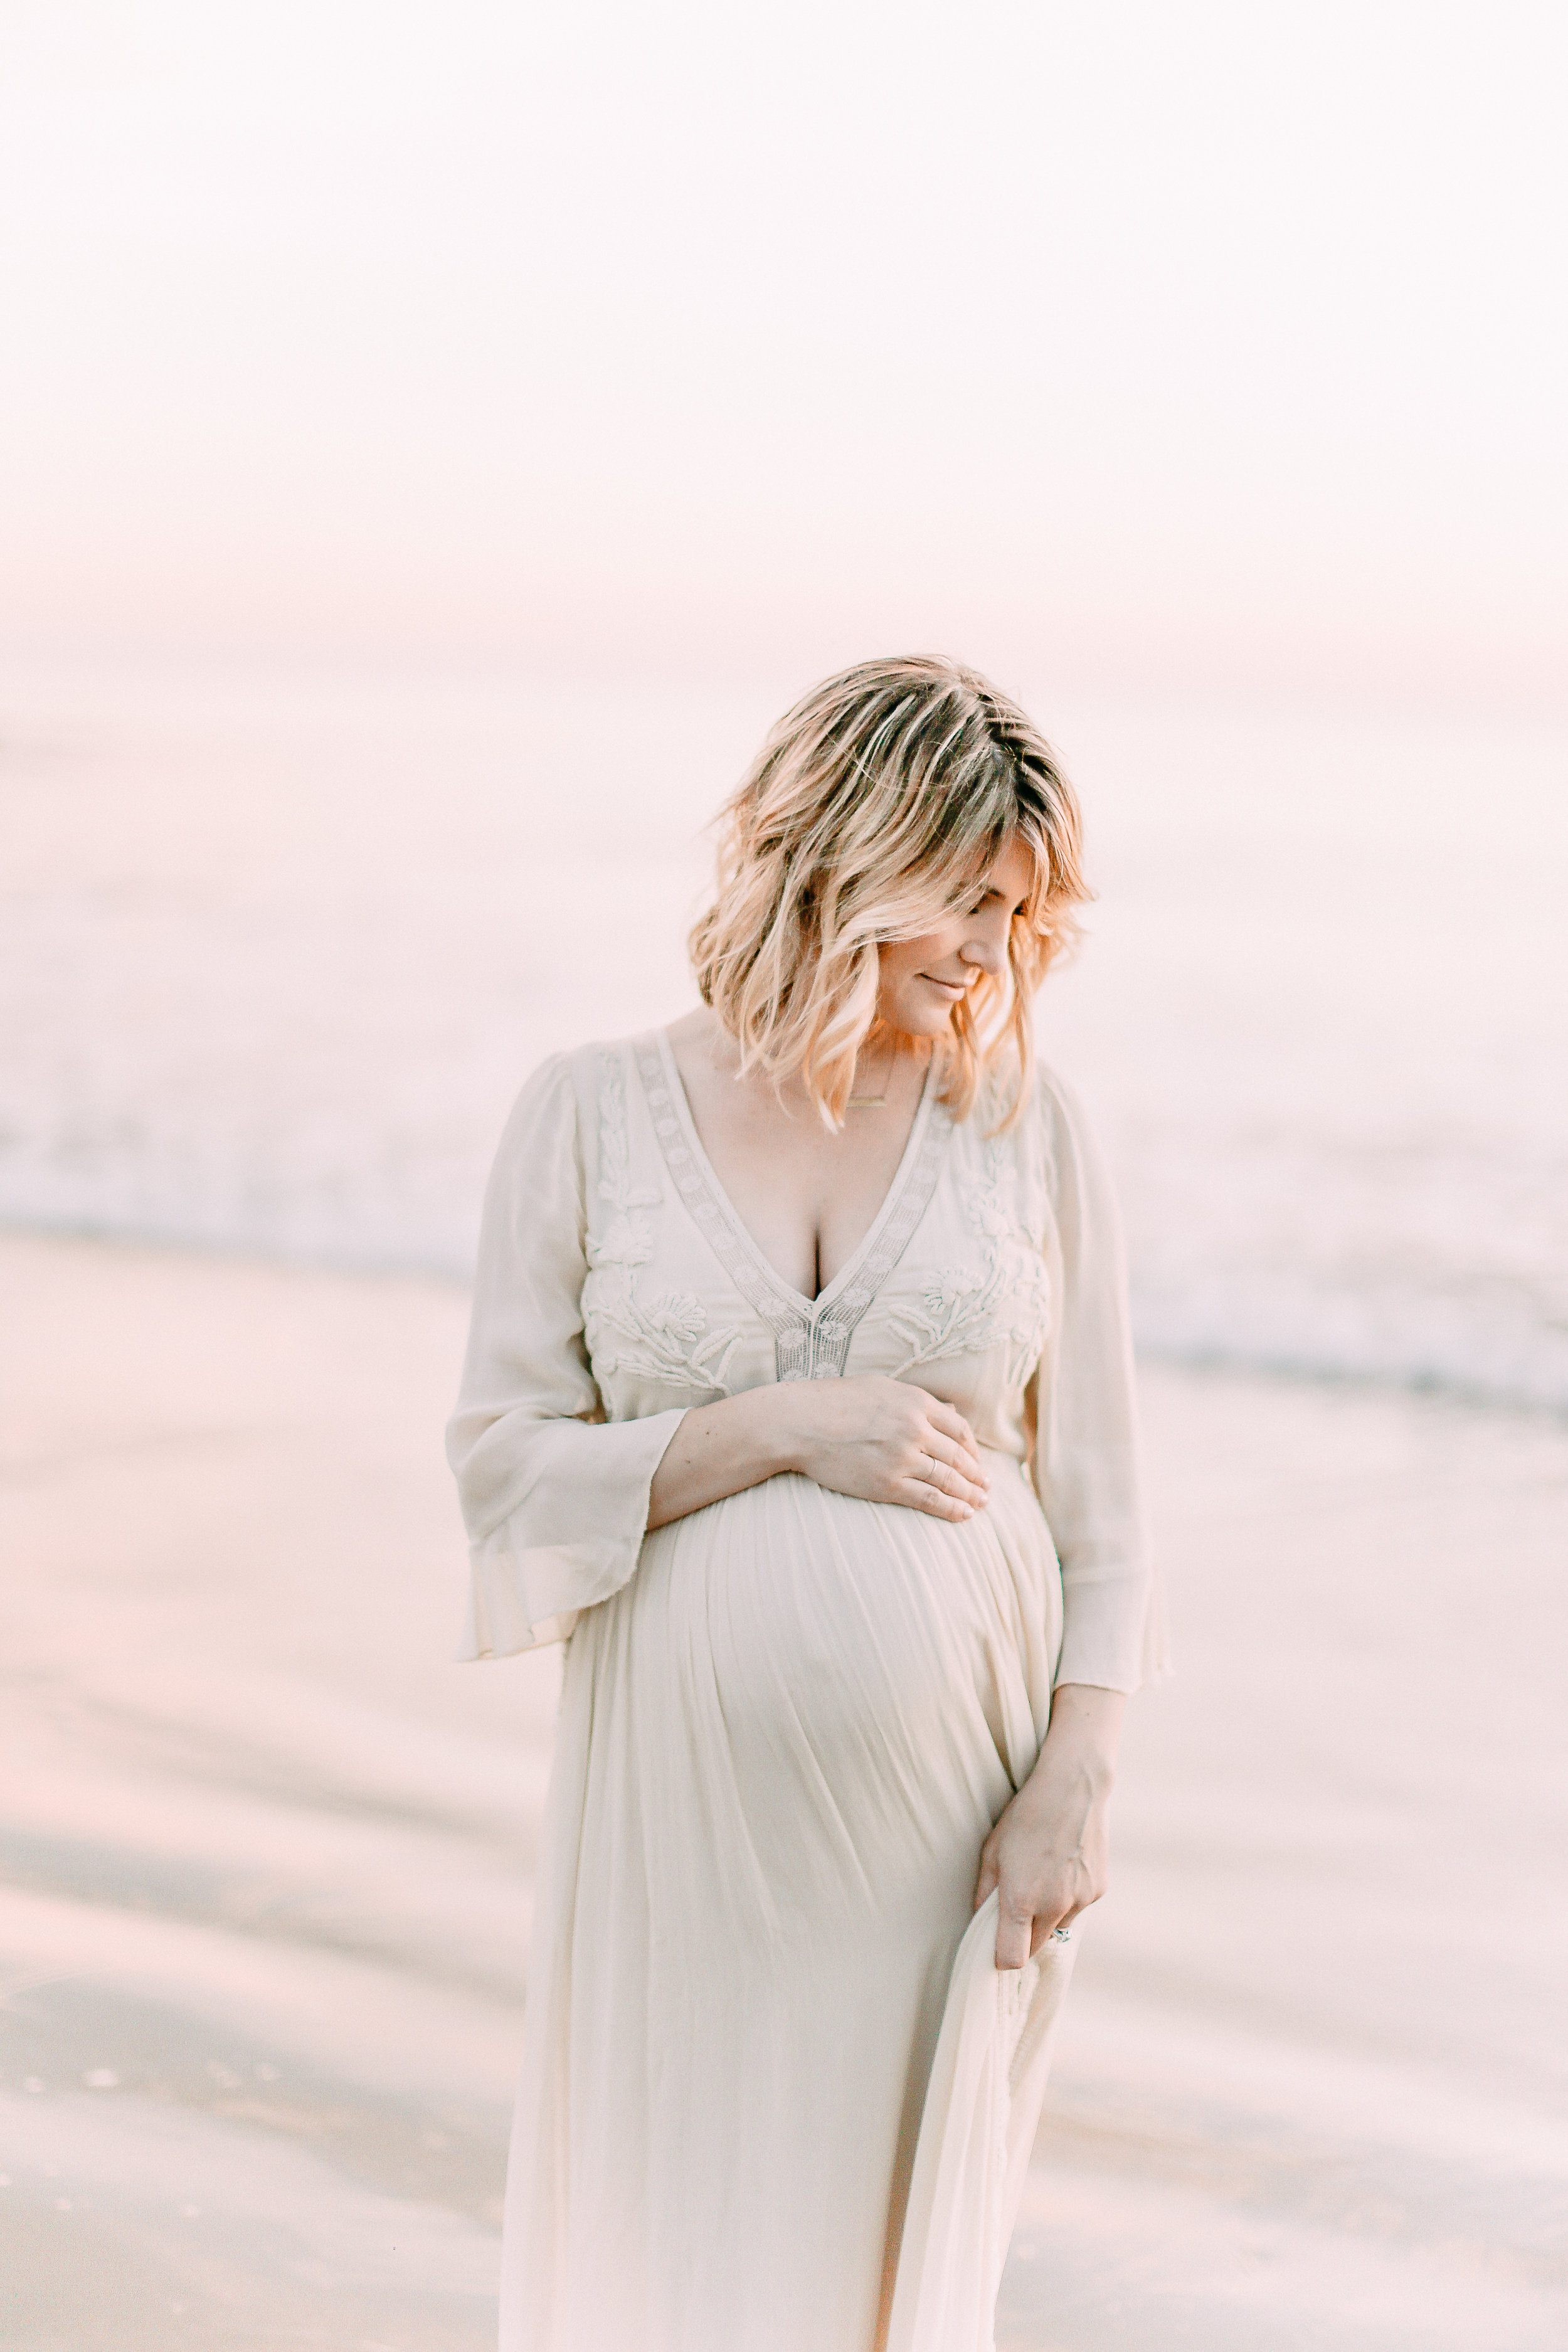 Cori-Kleckner-Photography- Pirro Maternity Session 1-206.JPG